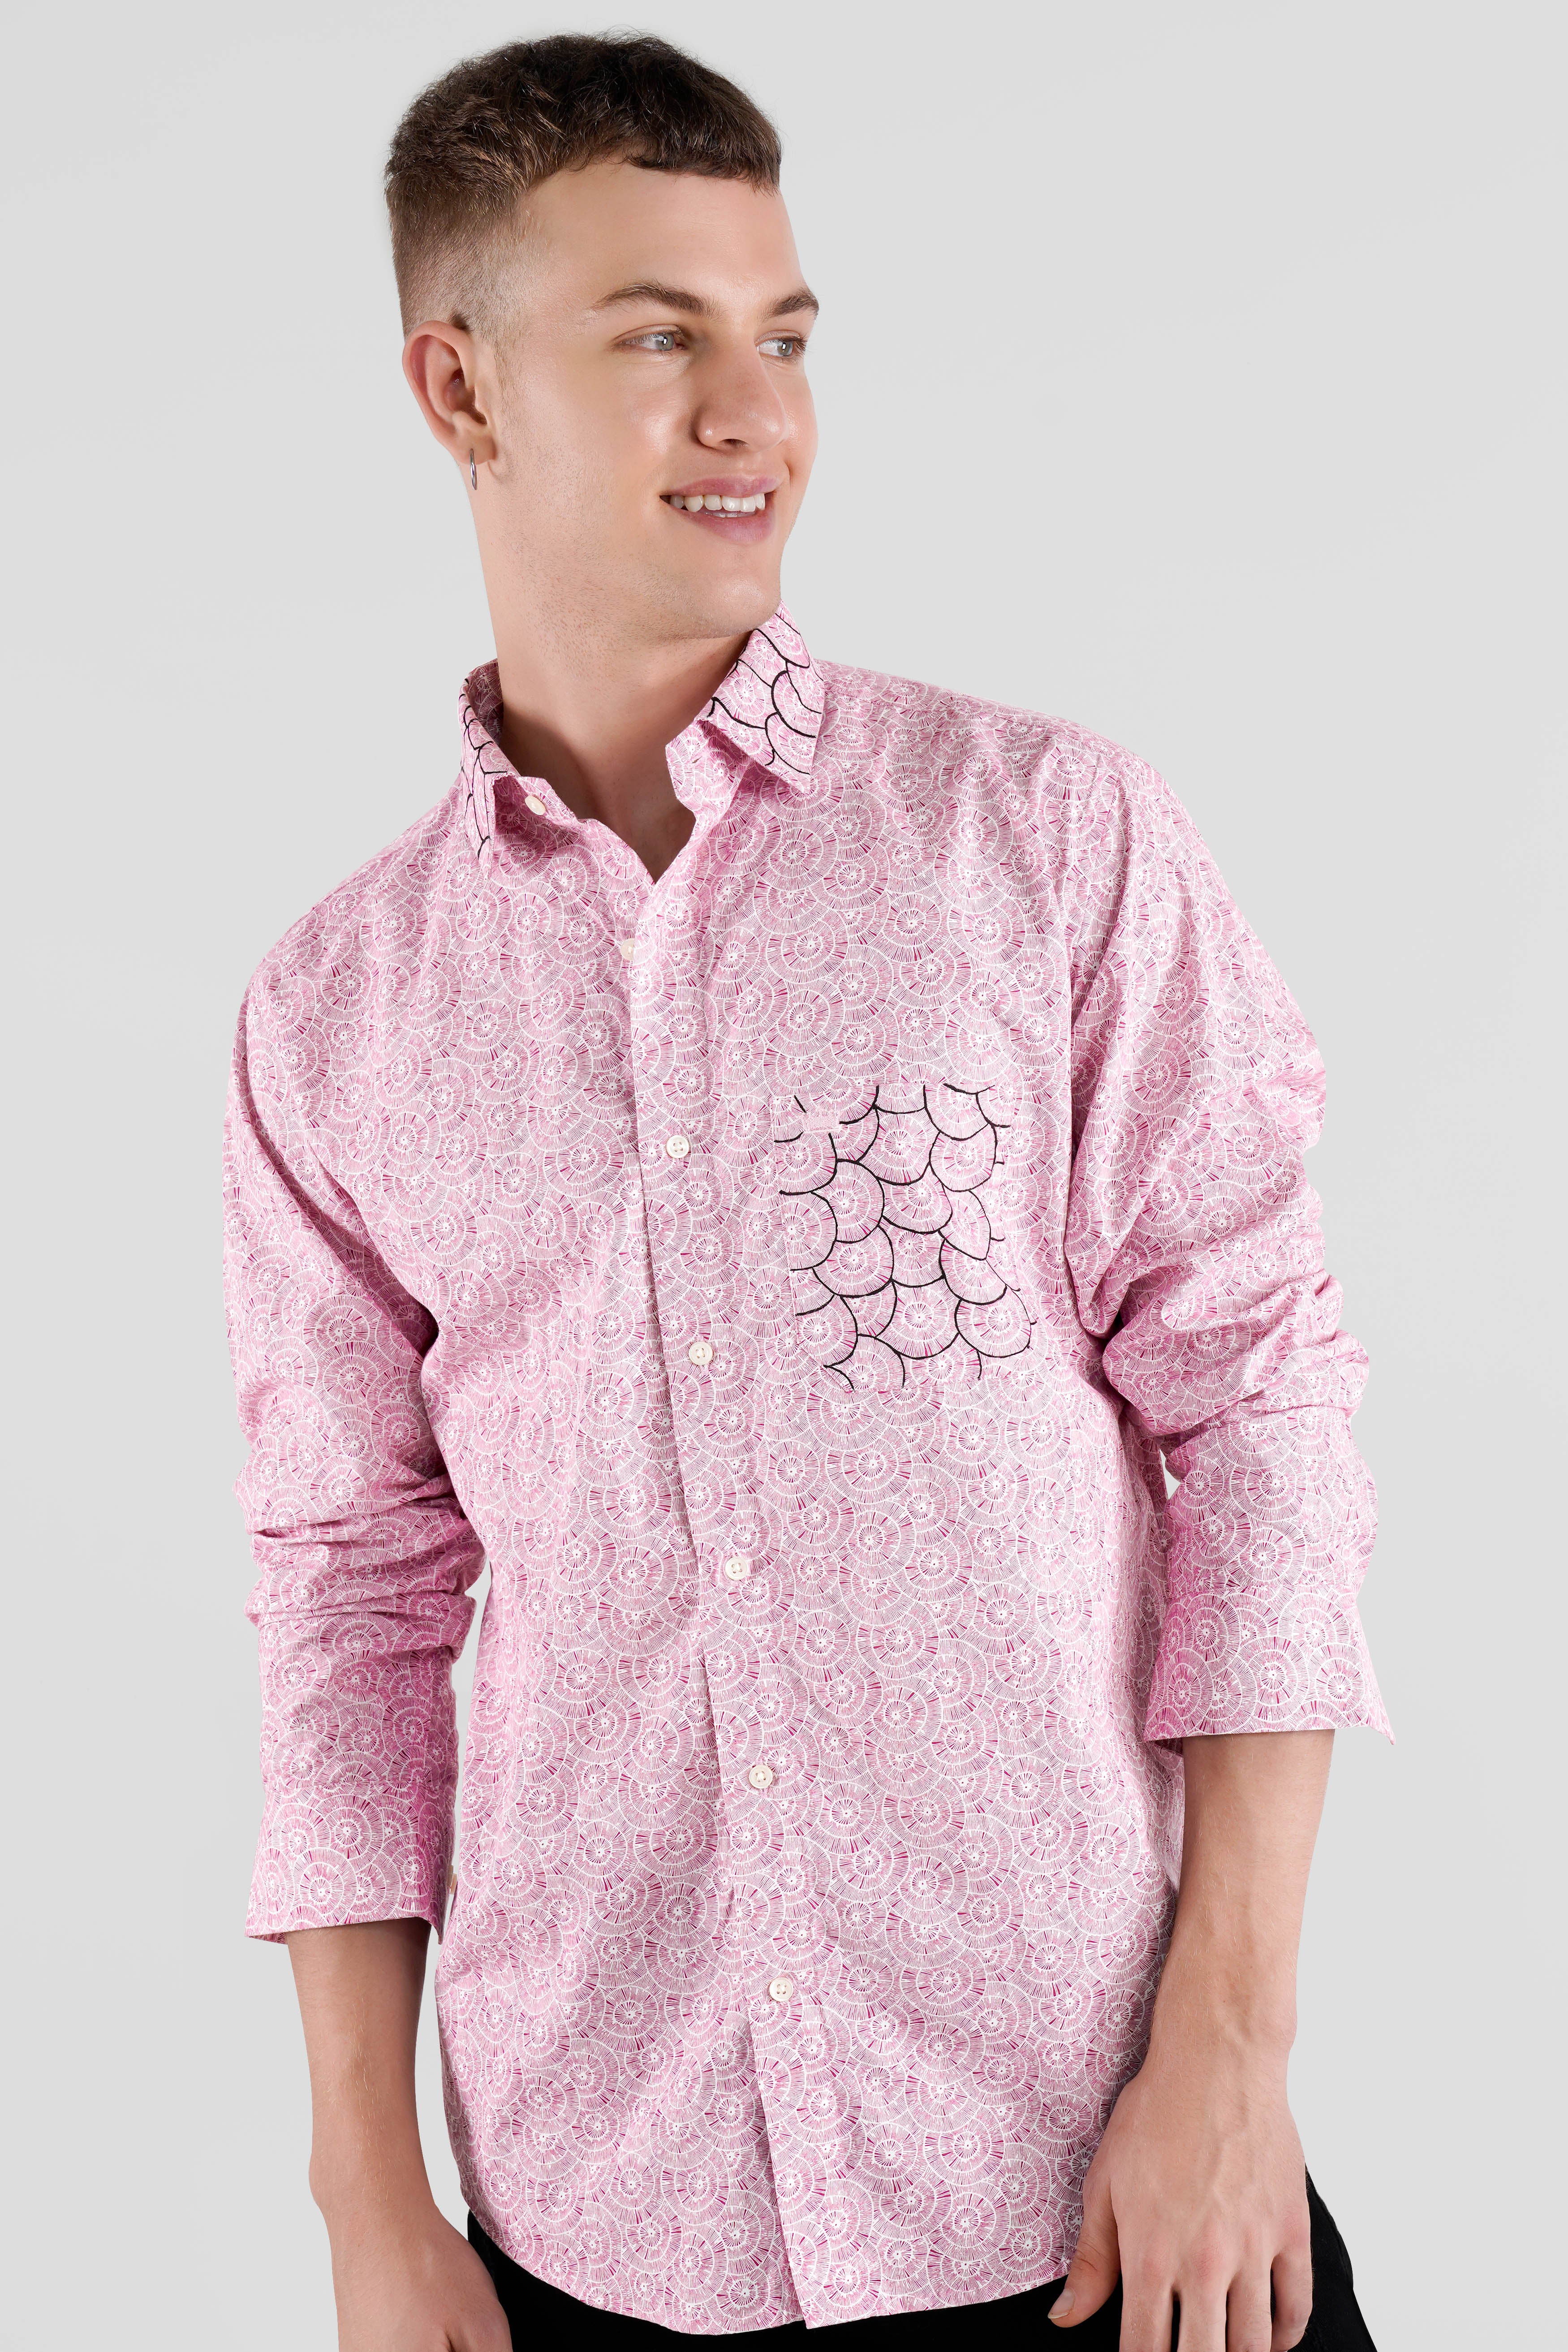 Blossom Pink and White Hand Painted Twill Premium Cotton Designer Shirt